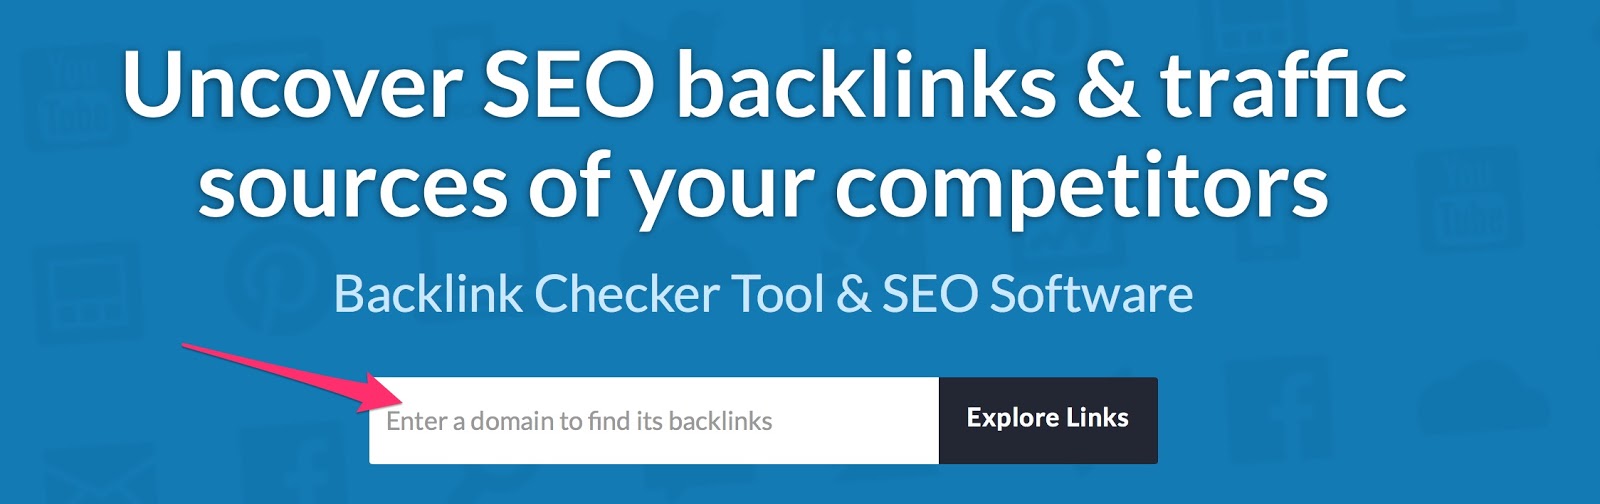 Backlink Checker Tool SEO Software by Rank Signals